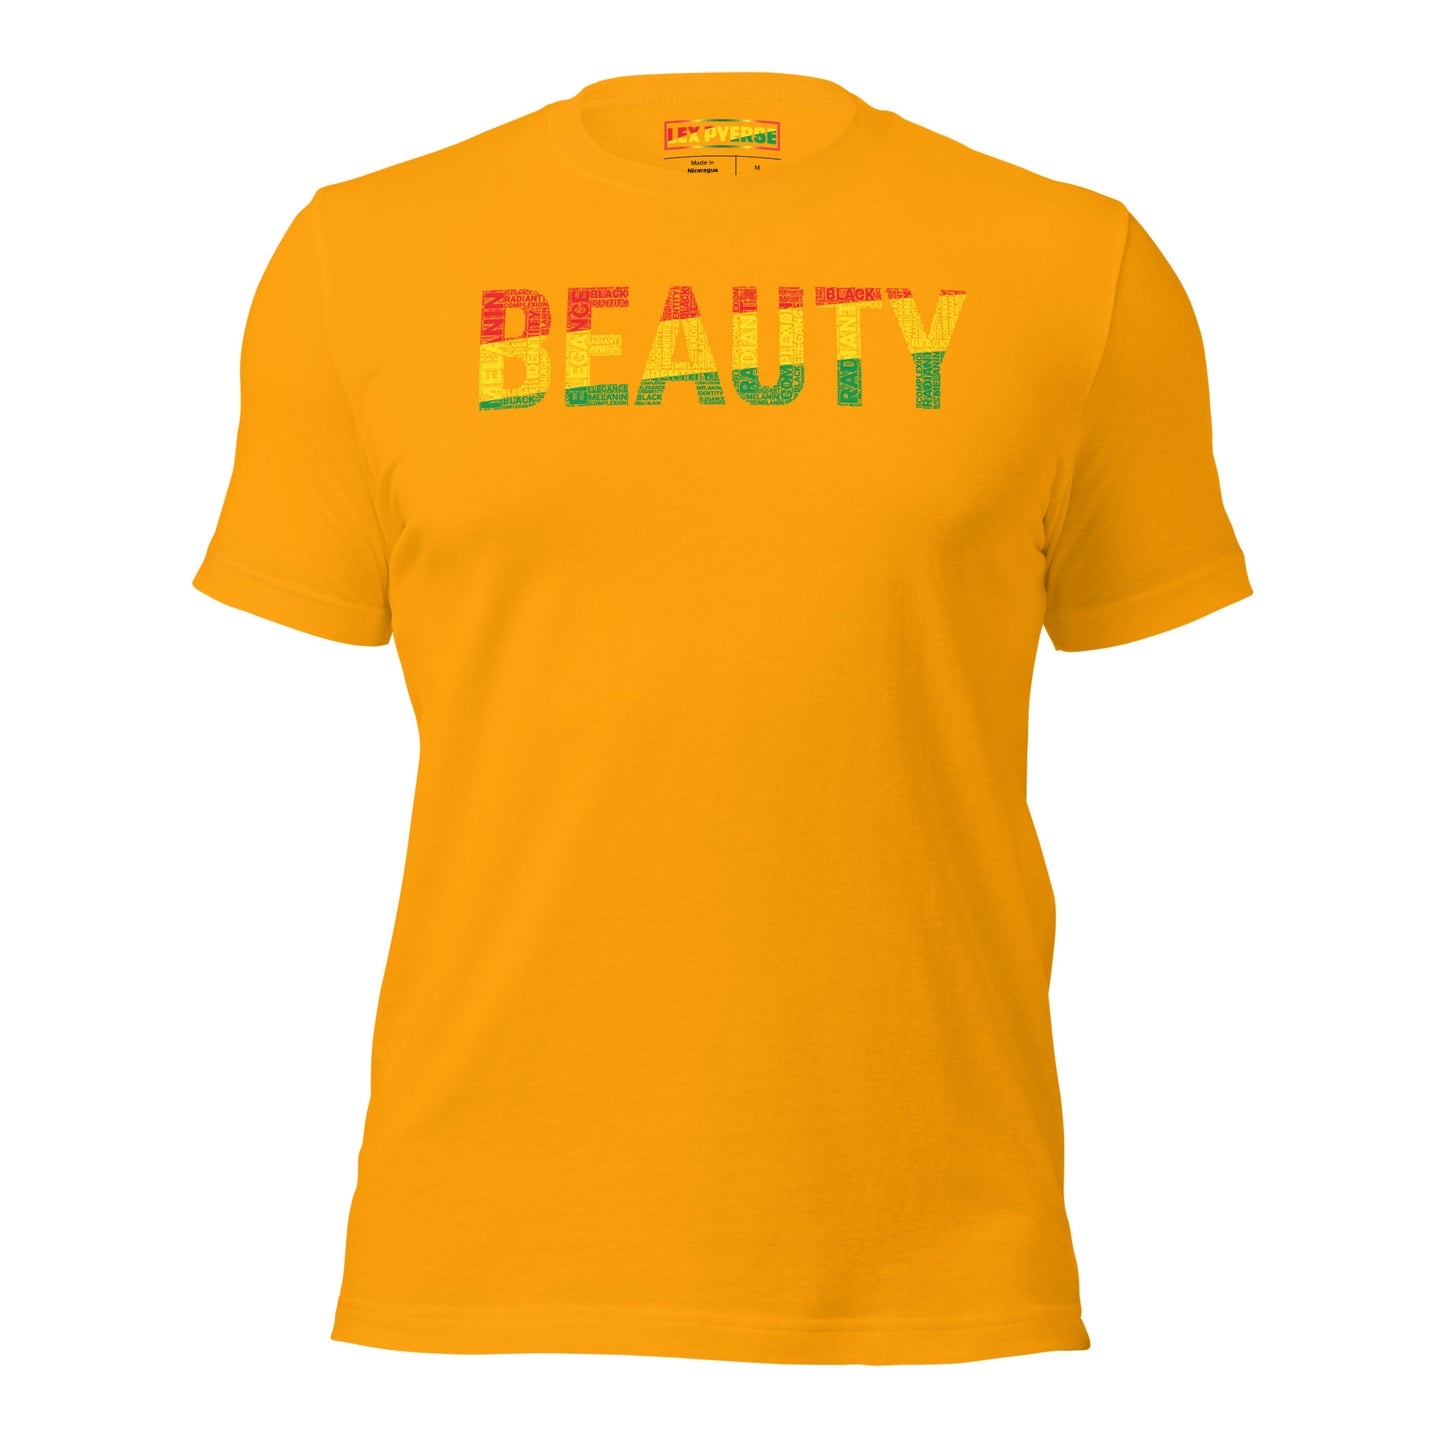 BEAUTY Pan African inspired Short-Sleeve Unisex T-Shirt